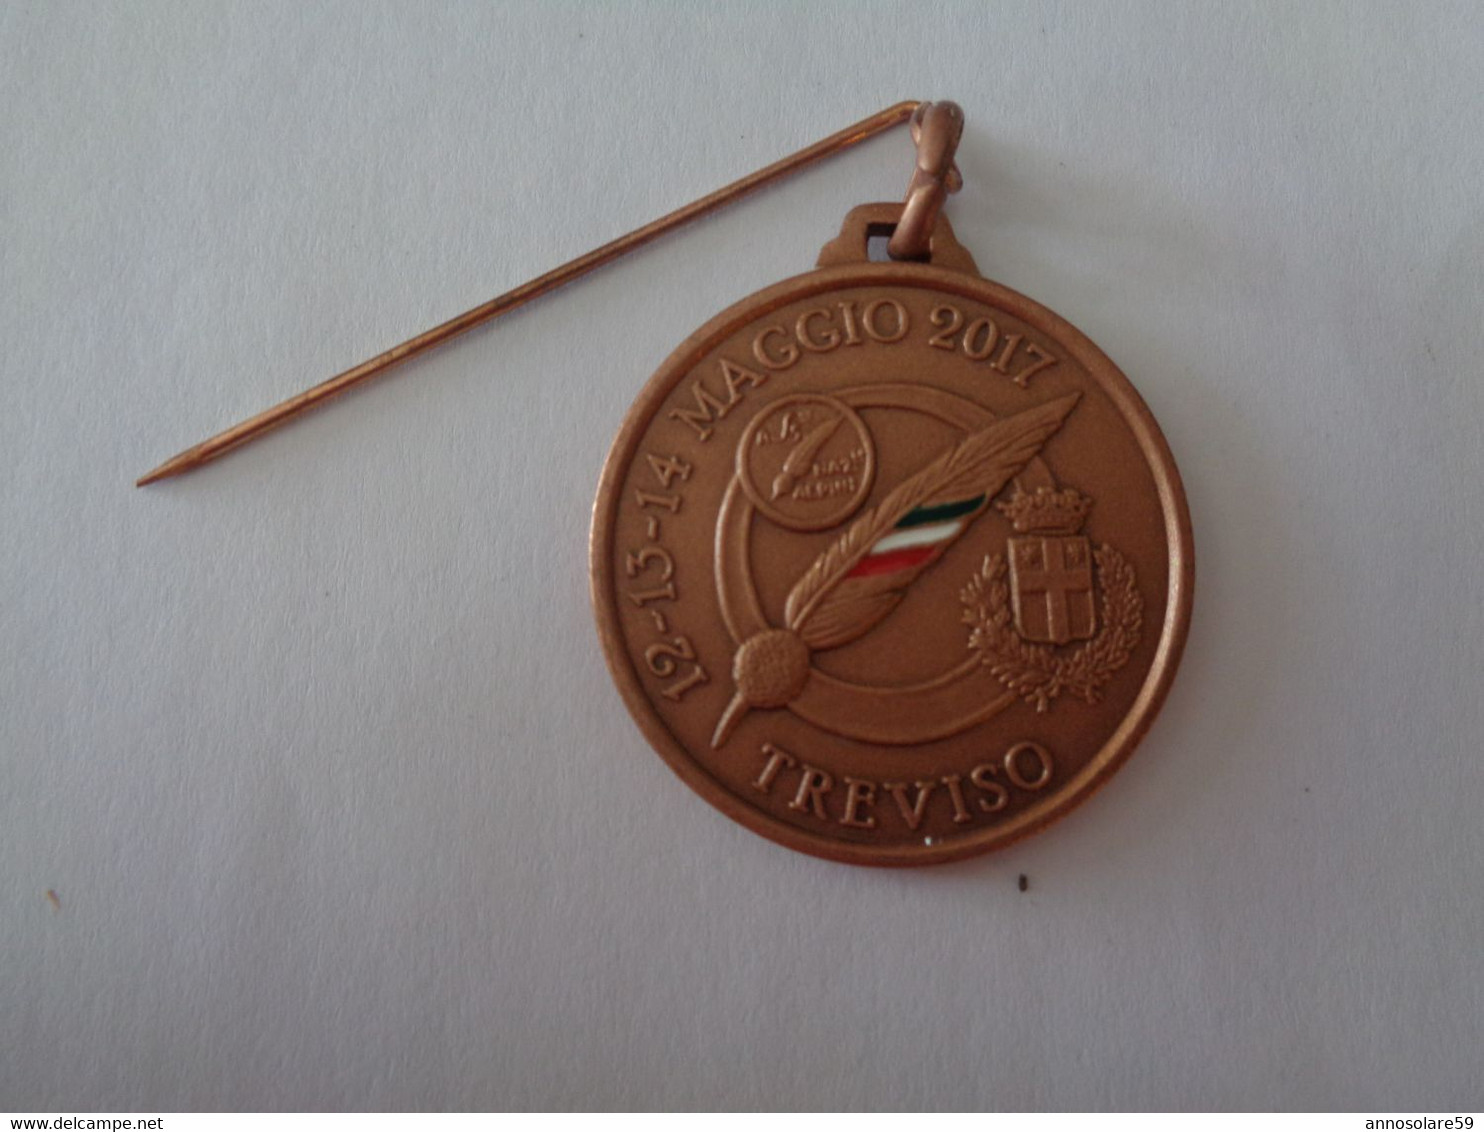 Medal, Medaglia Adunata Treviso 2017 - A.N.A. Associazione Nazionale Alpini  - LEGGI - Italie